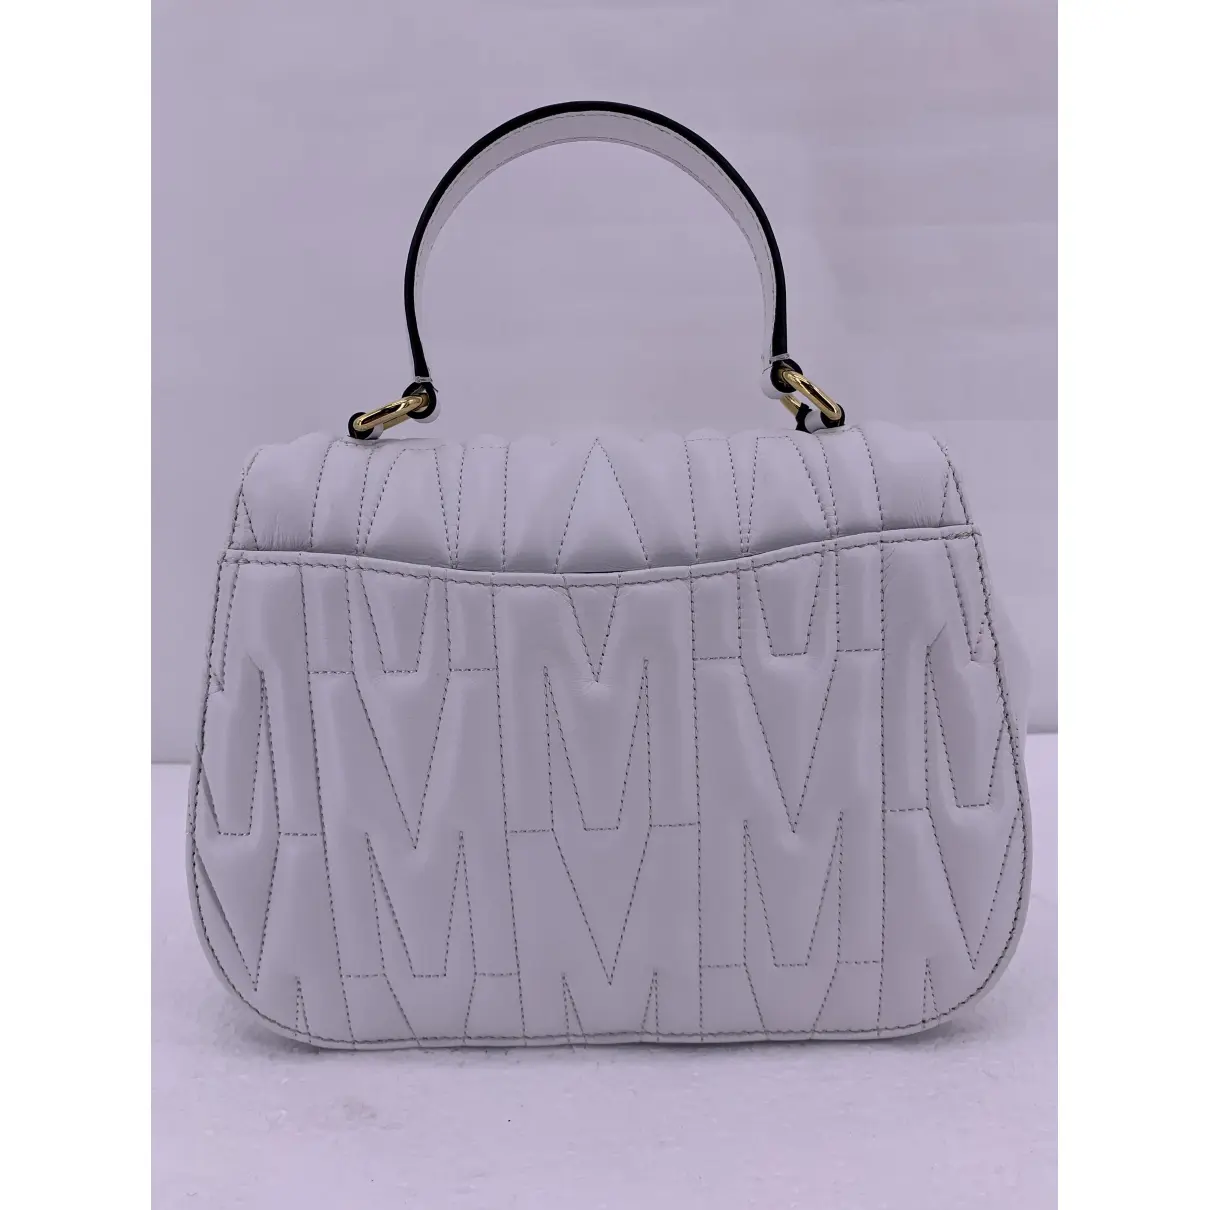 Buy Moschino Leather crossbody bag online